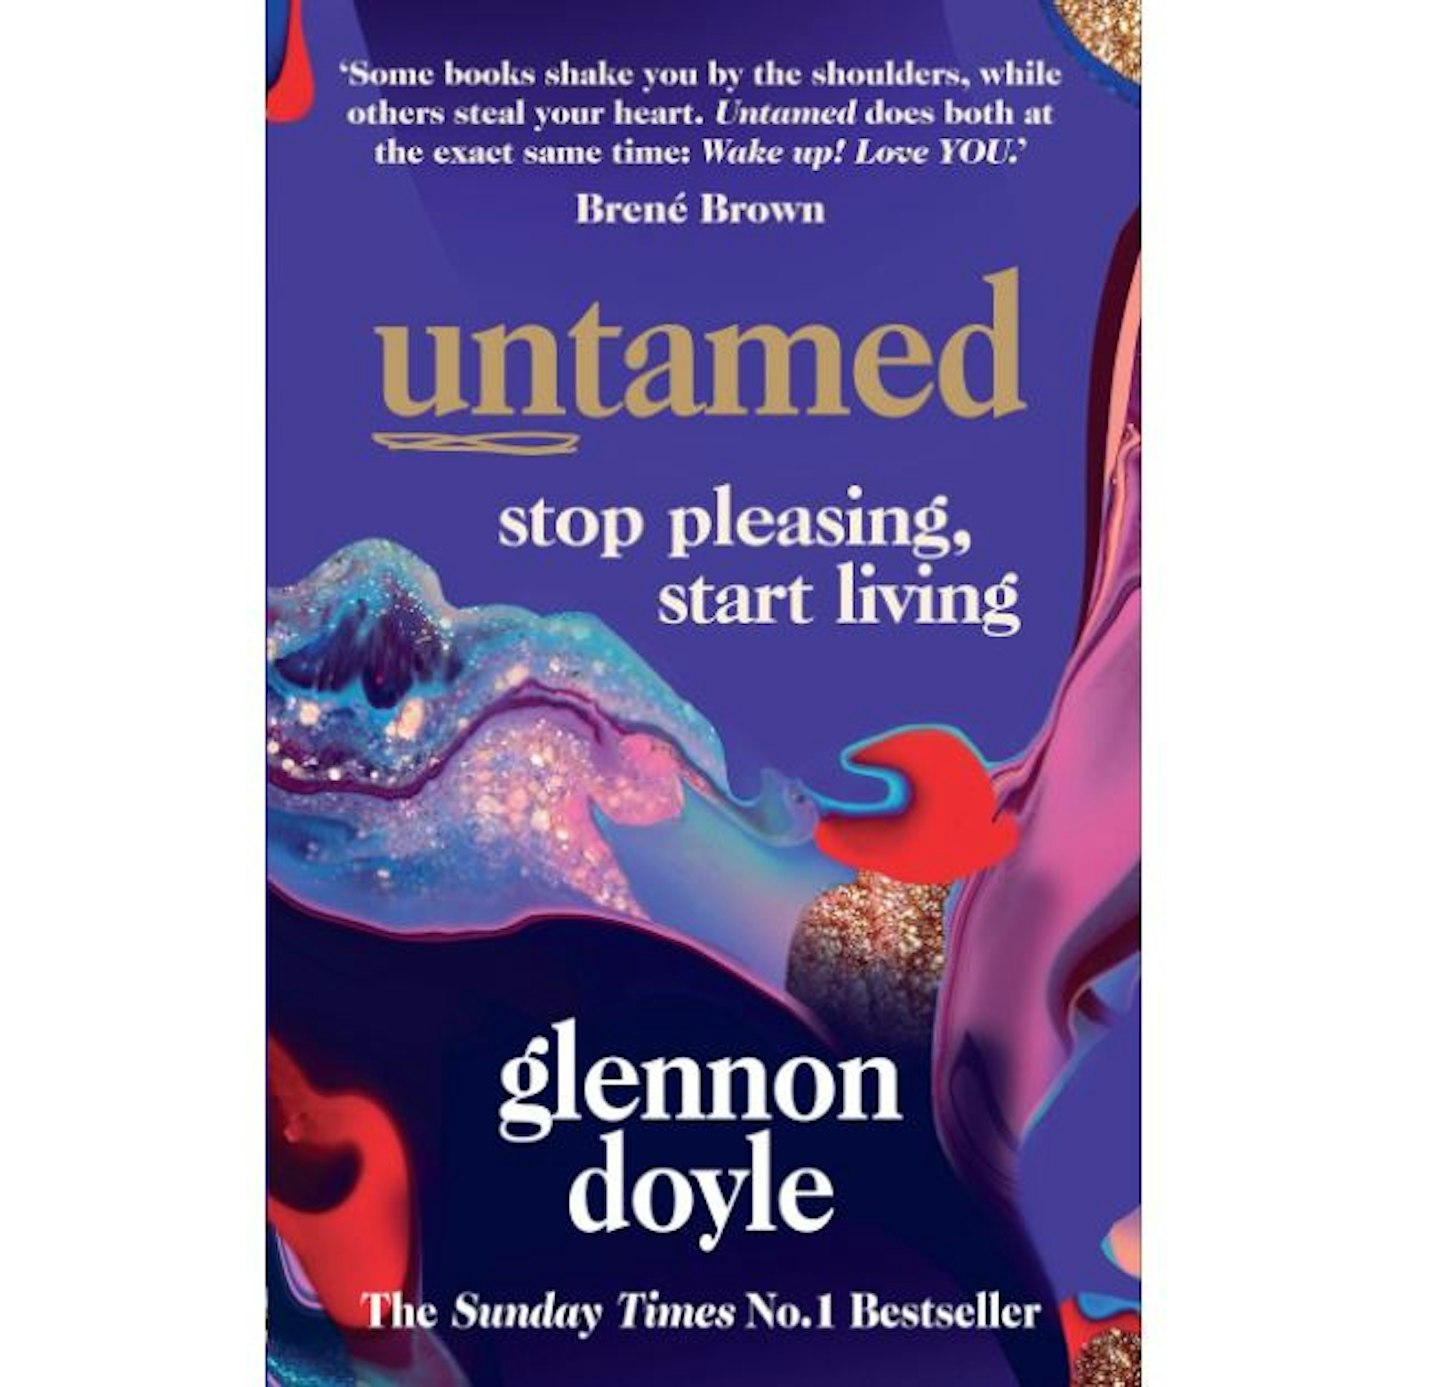 Untamed: Stop Pleasing, Start Living by Glennon Doyle